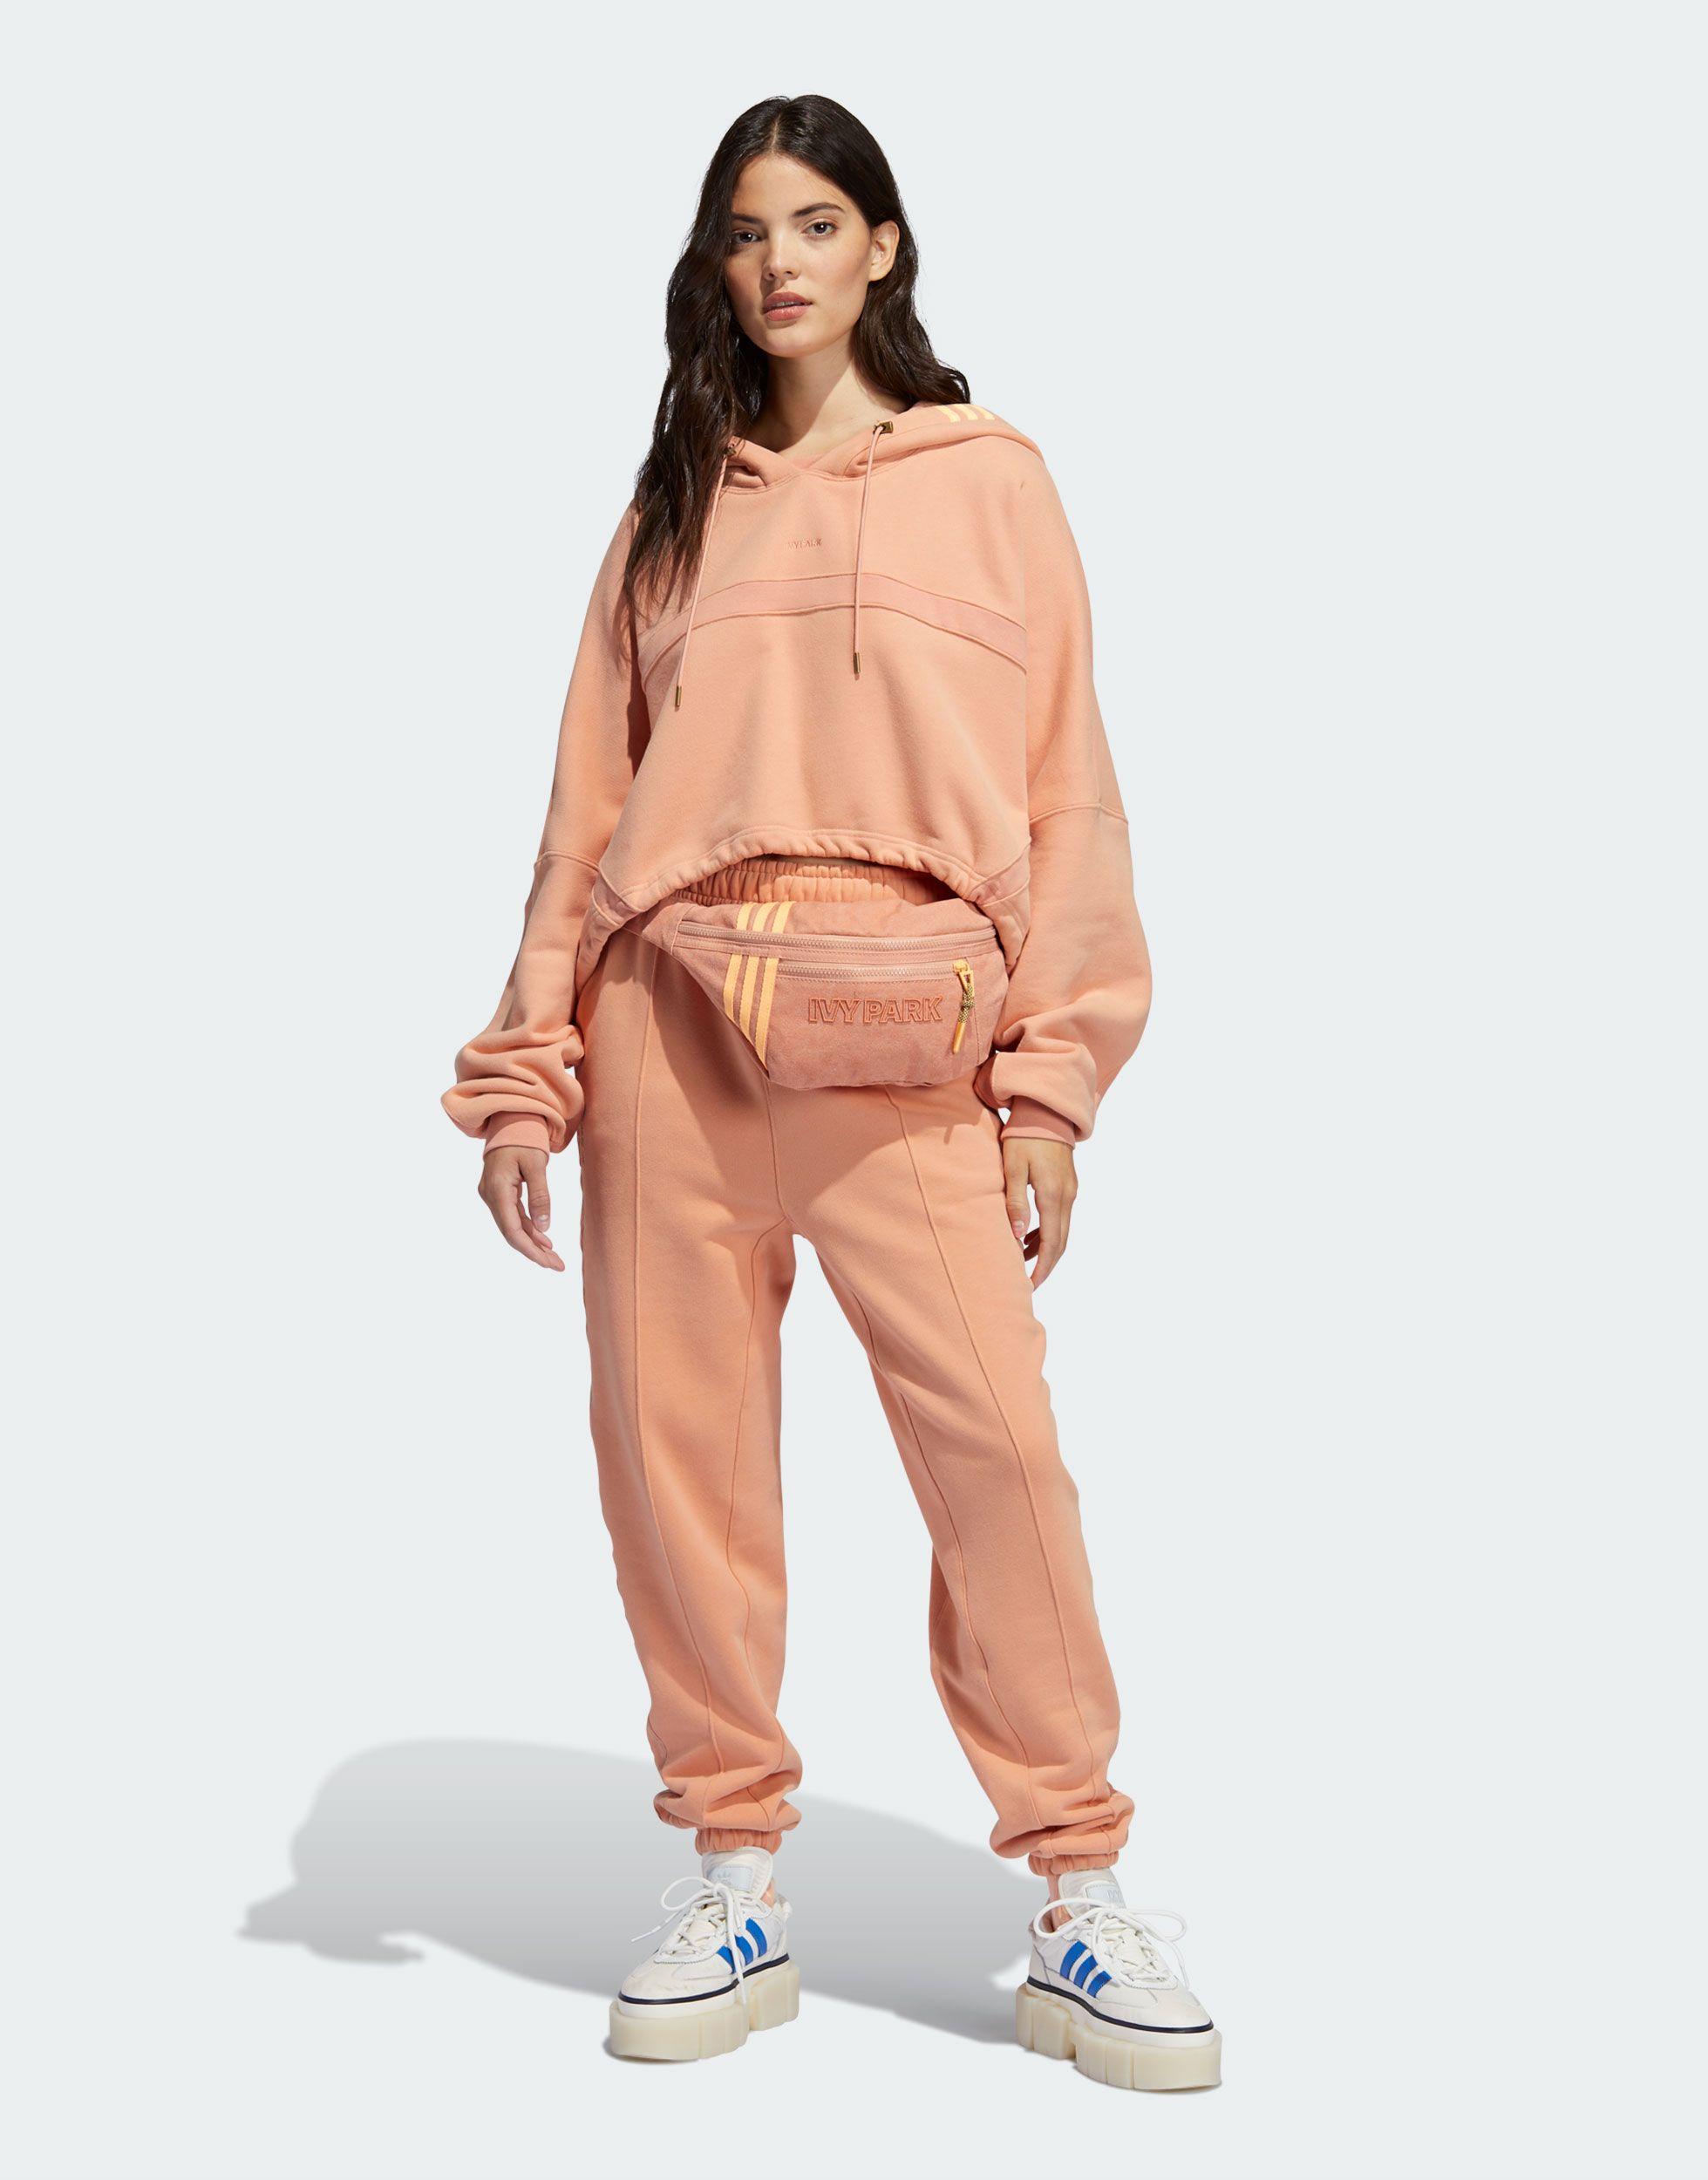 Ivy Park Adidas Originals Cropped Hoodie in Pink | Lyst